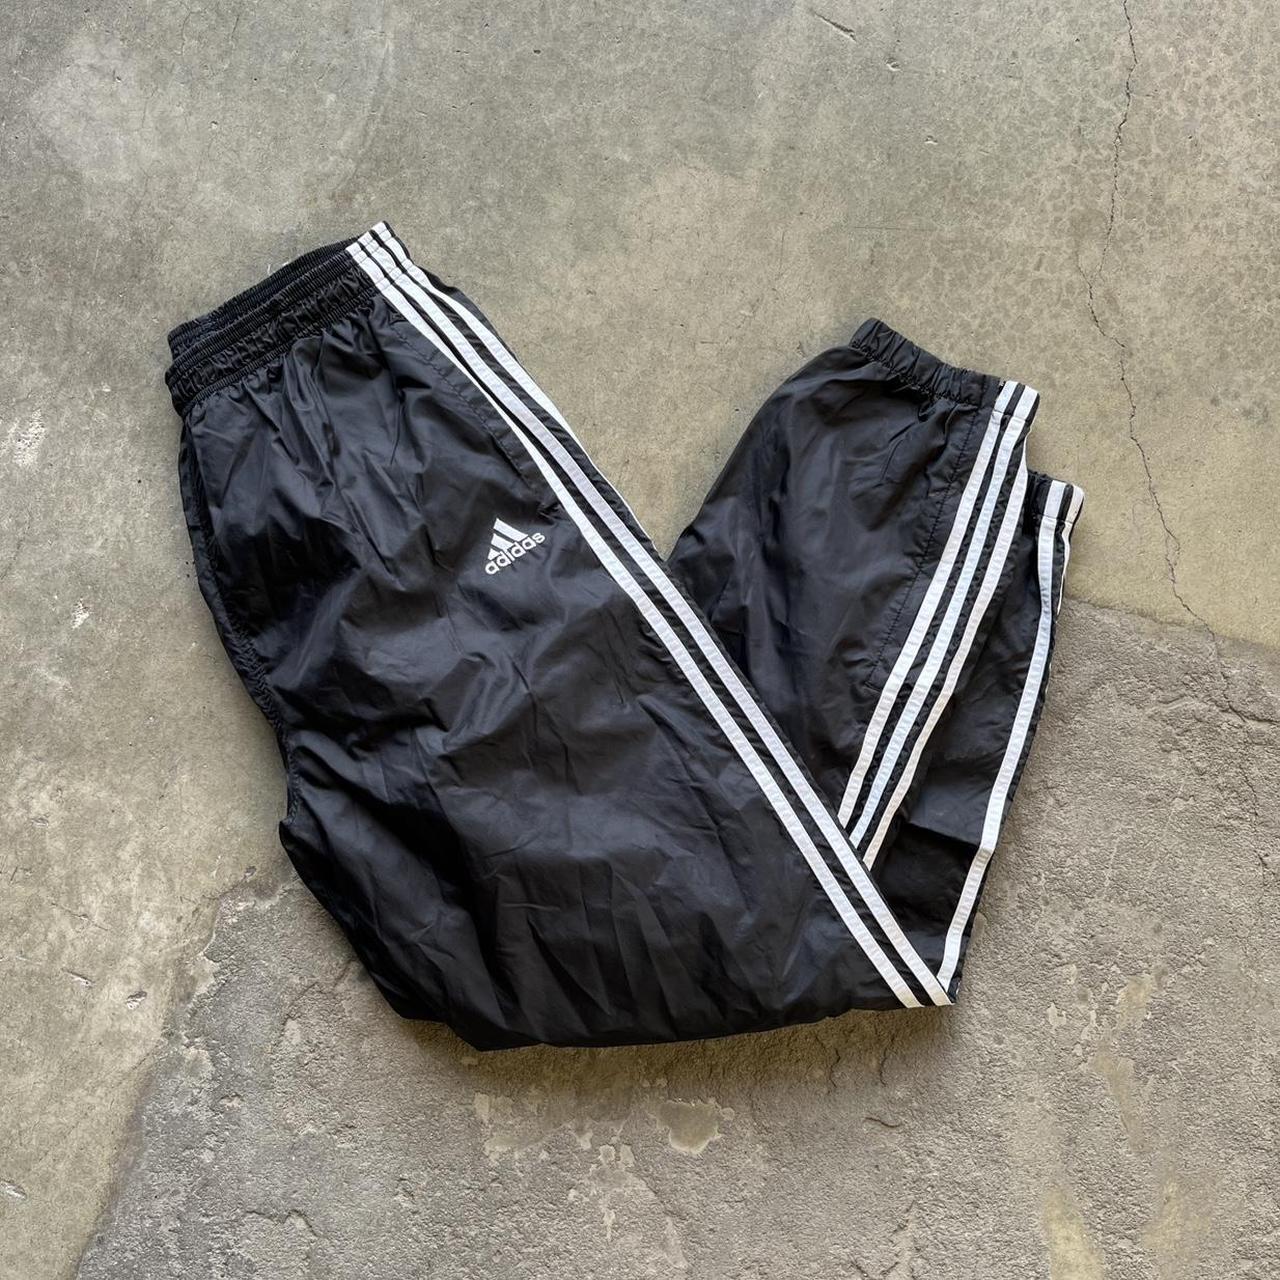 Vintage adidas track pants, Size large w